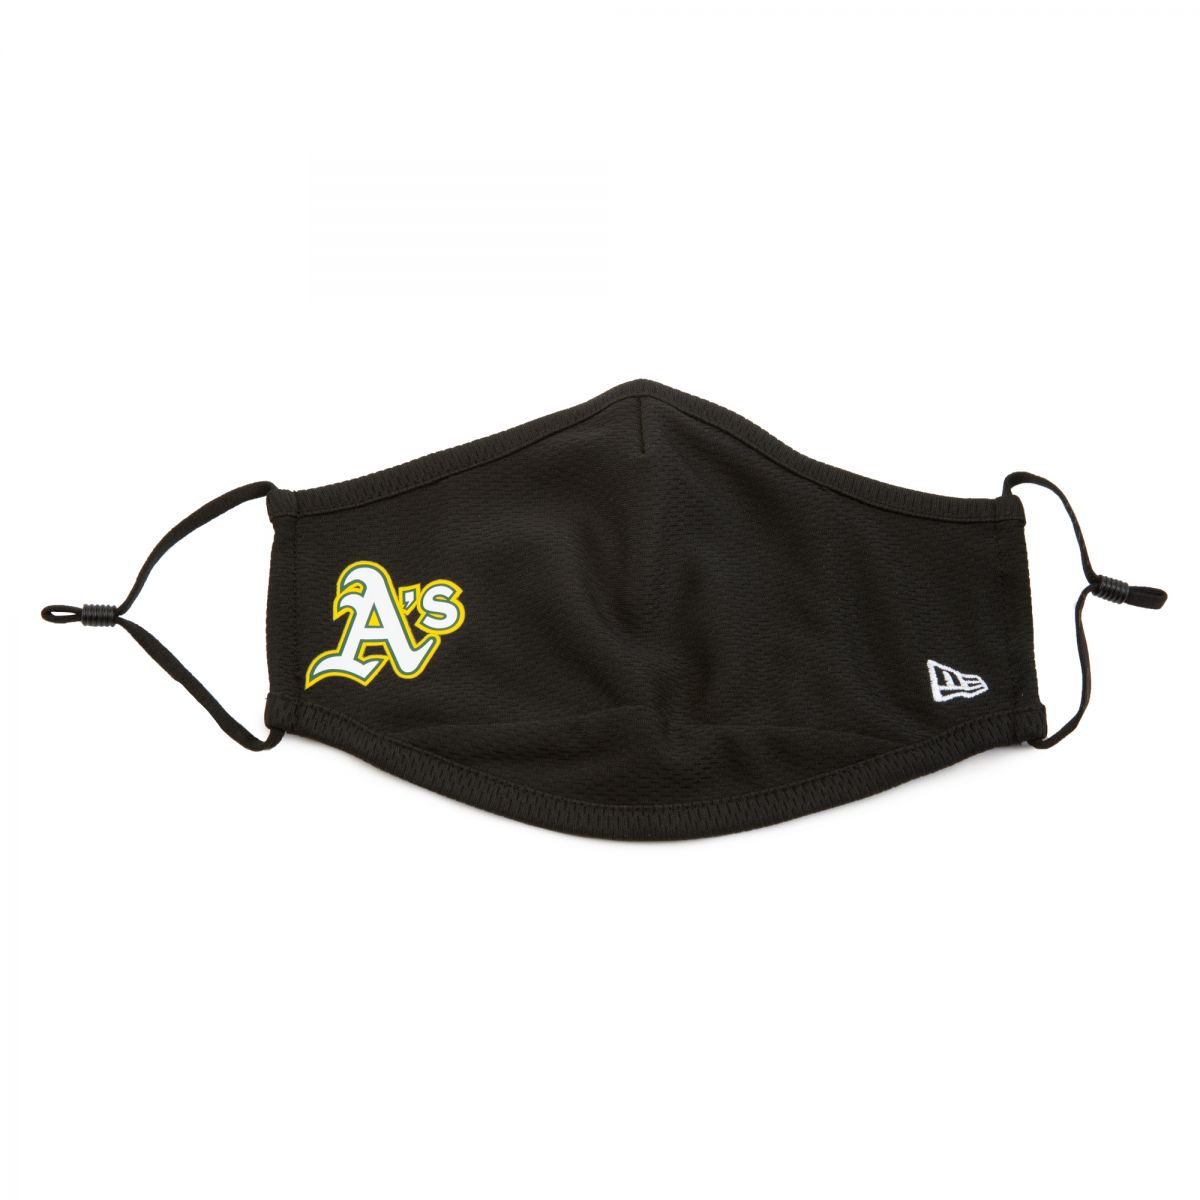 New Era Caps Oakland Athletics Face Mask 60113287 Karmaloop